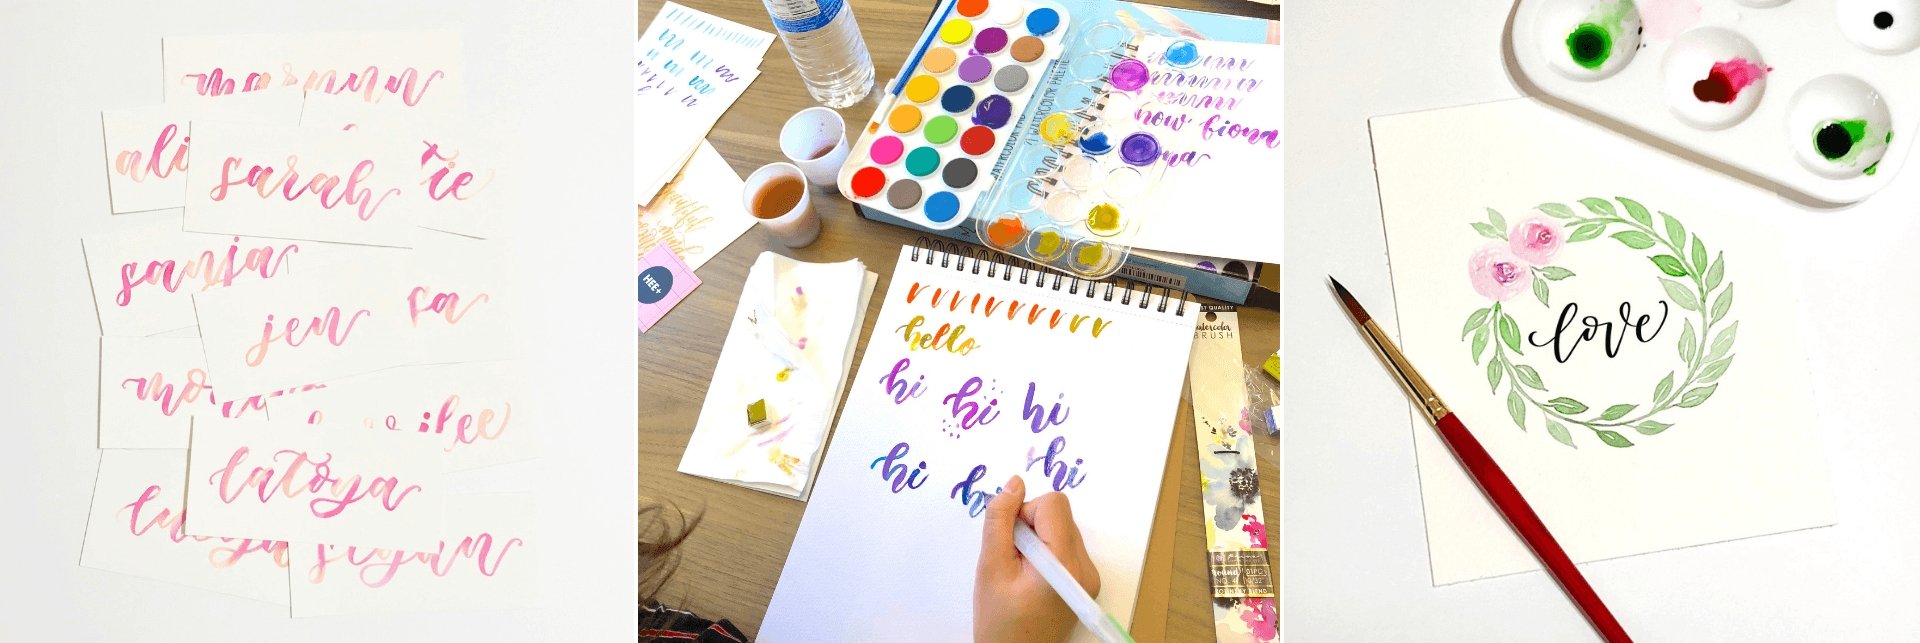 Intro to Watercolor Lettering Workshop - April 17 - indigo & violet studio LLC